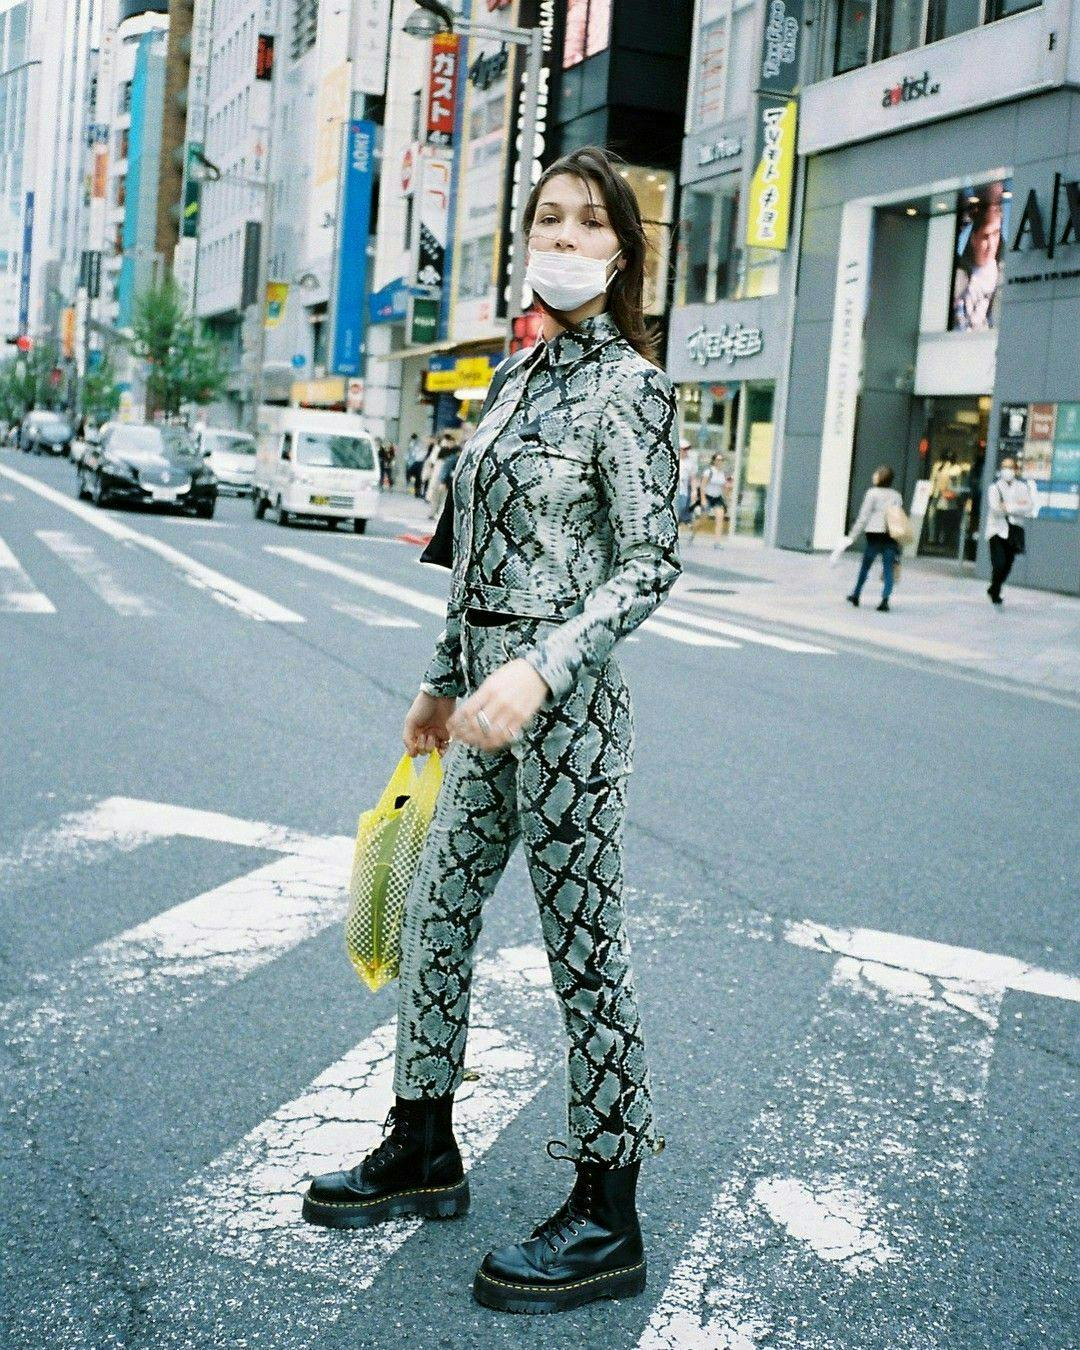 road tarmac person clothing zebra crossing pedestrian car transportation vehicle female